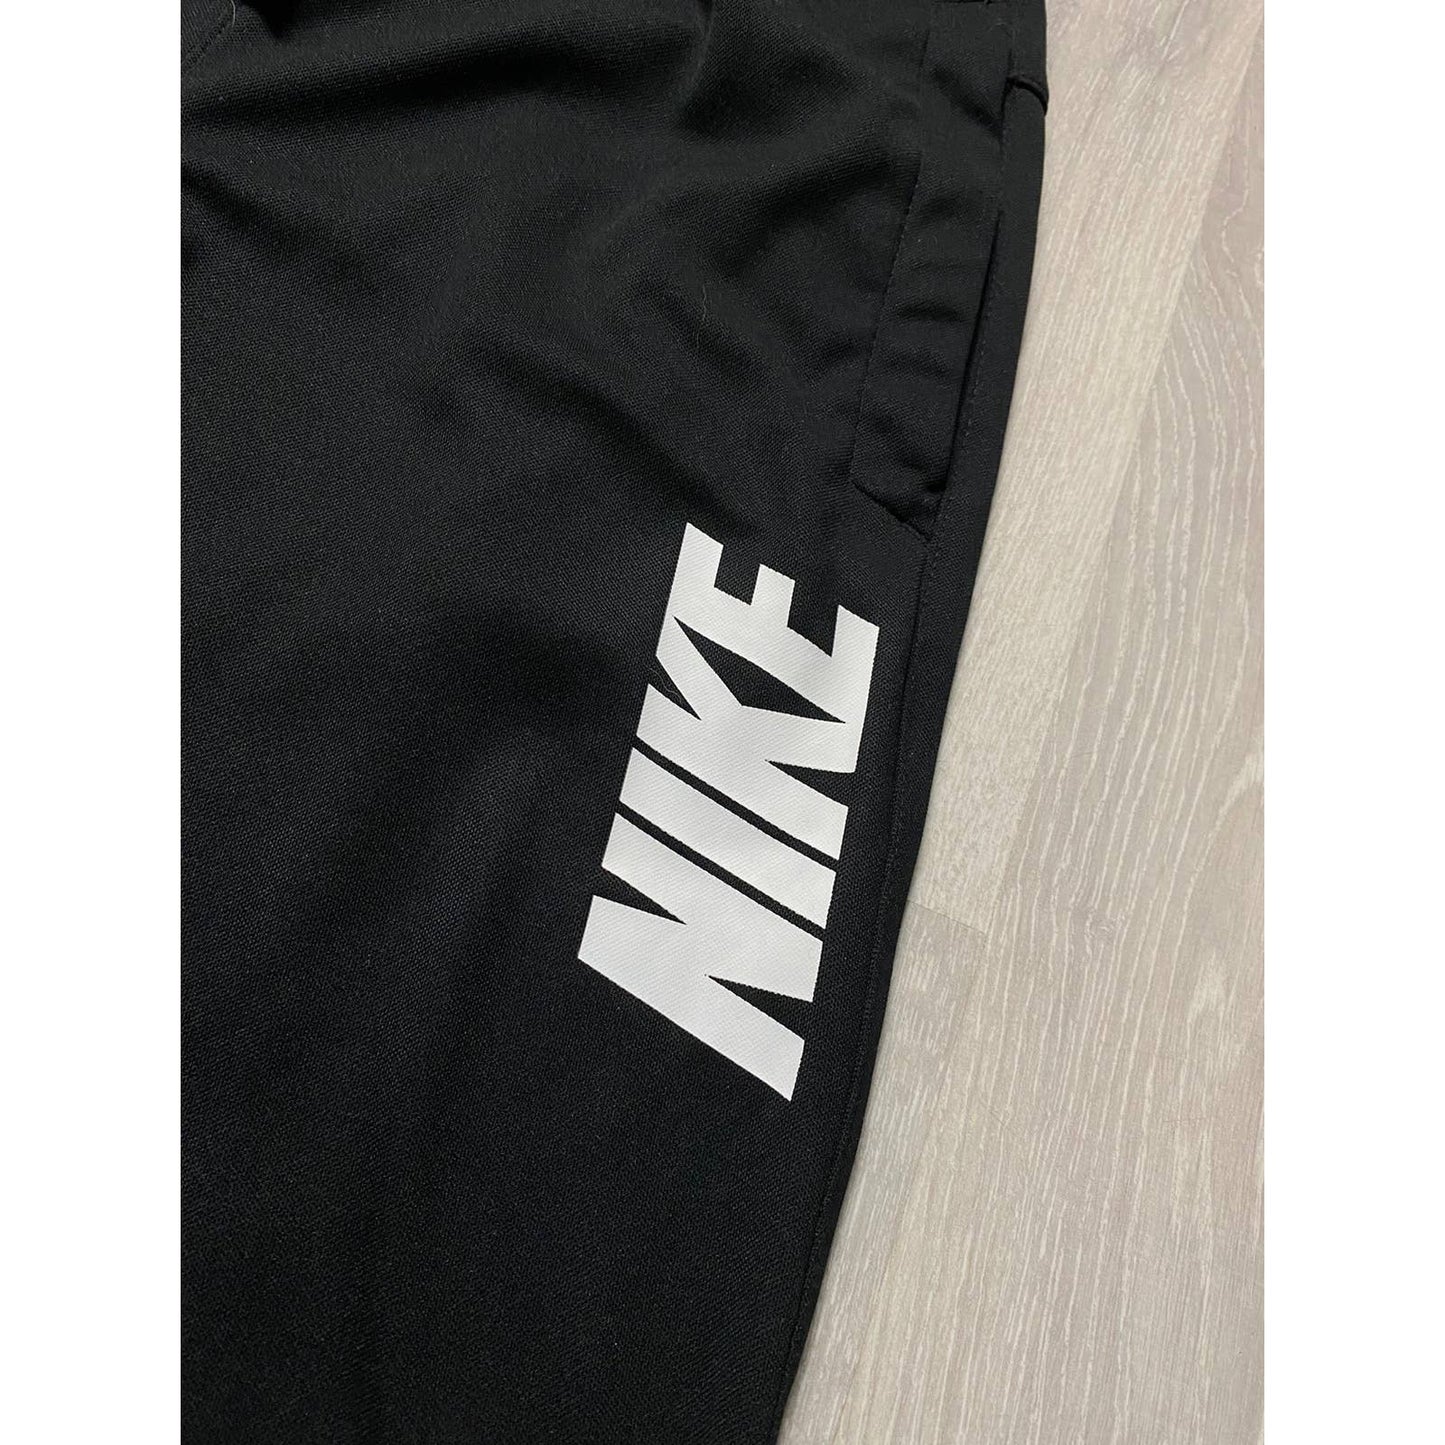 Nike vintage black sweatpants spell out big logo